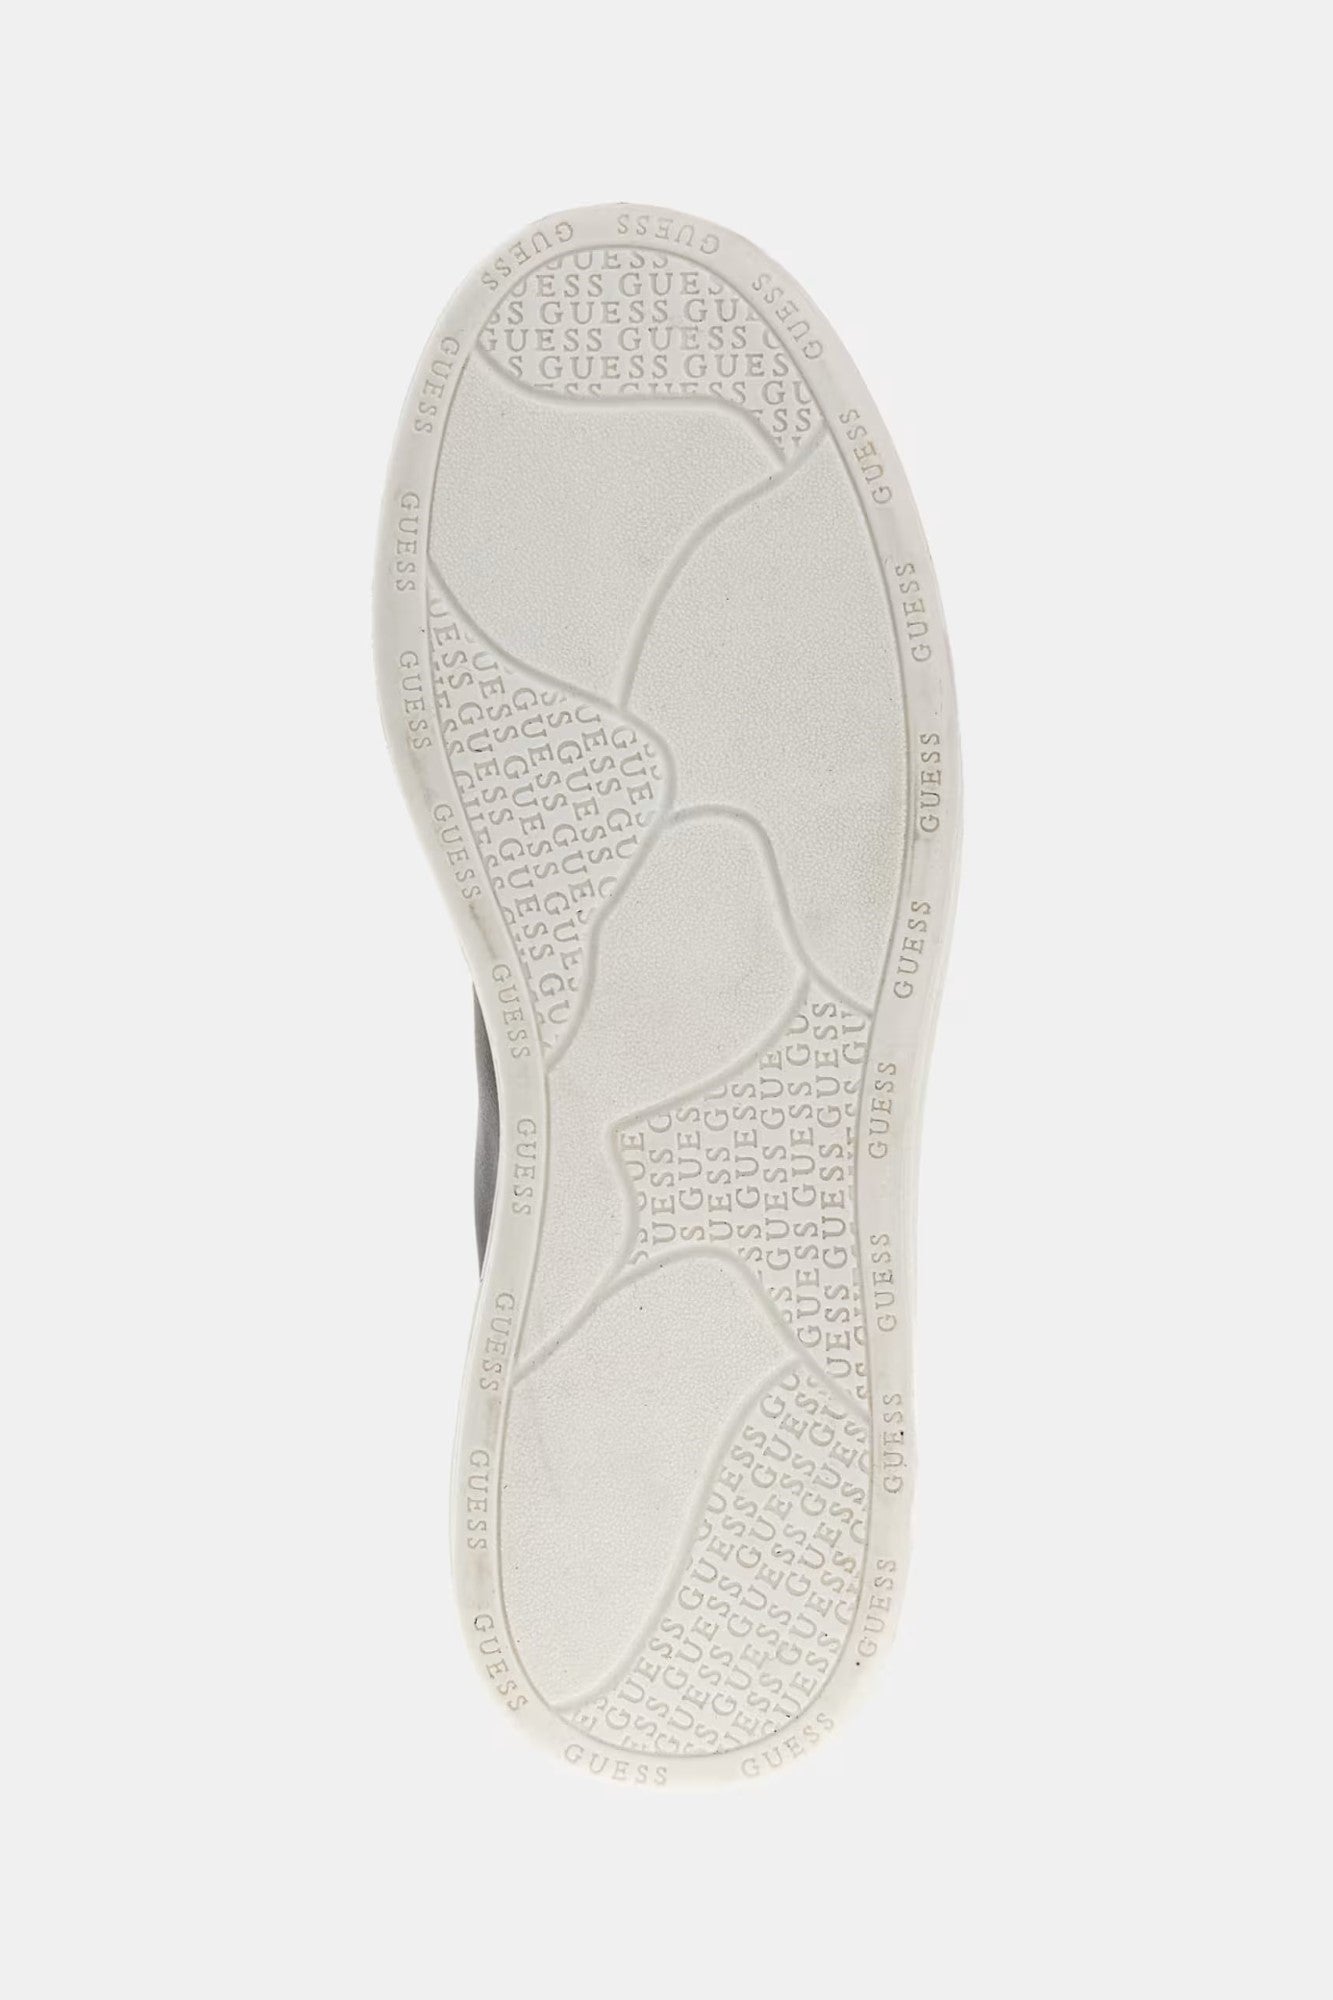 Pantofi sport GUESS cu logo metalic din amestec de piele INCALTAMINTE GUESS   